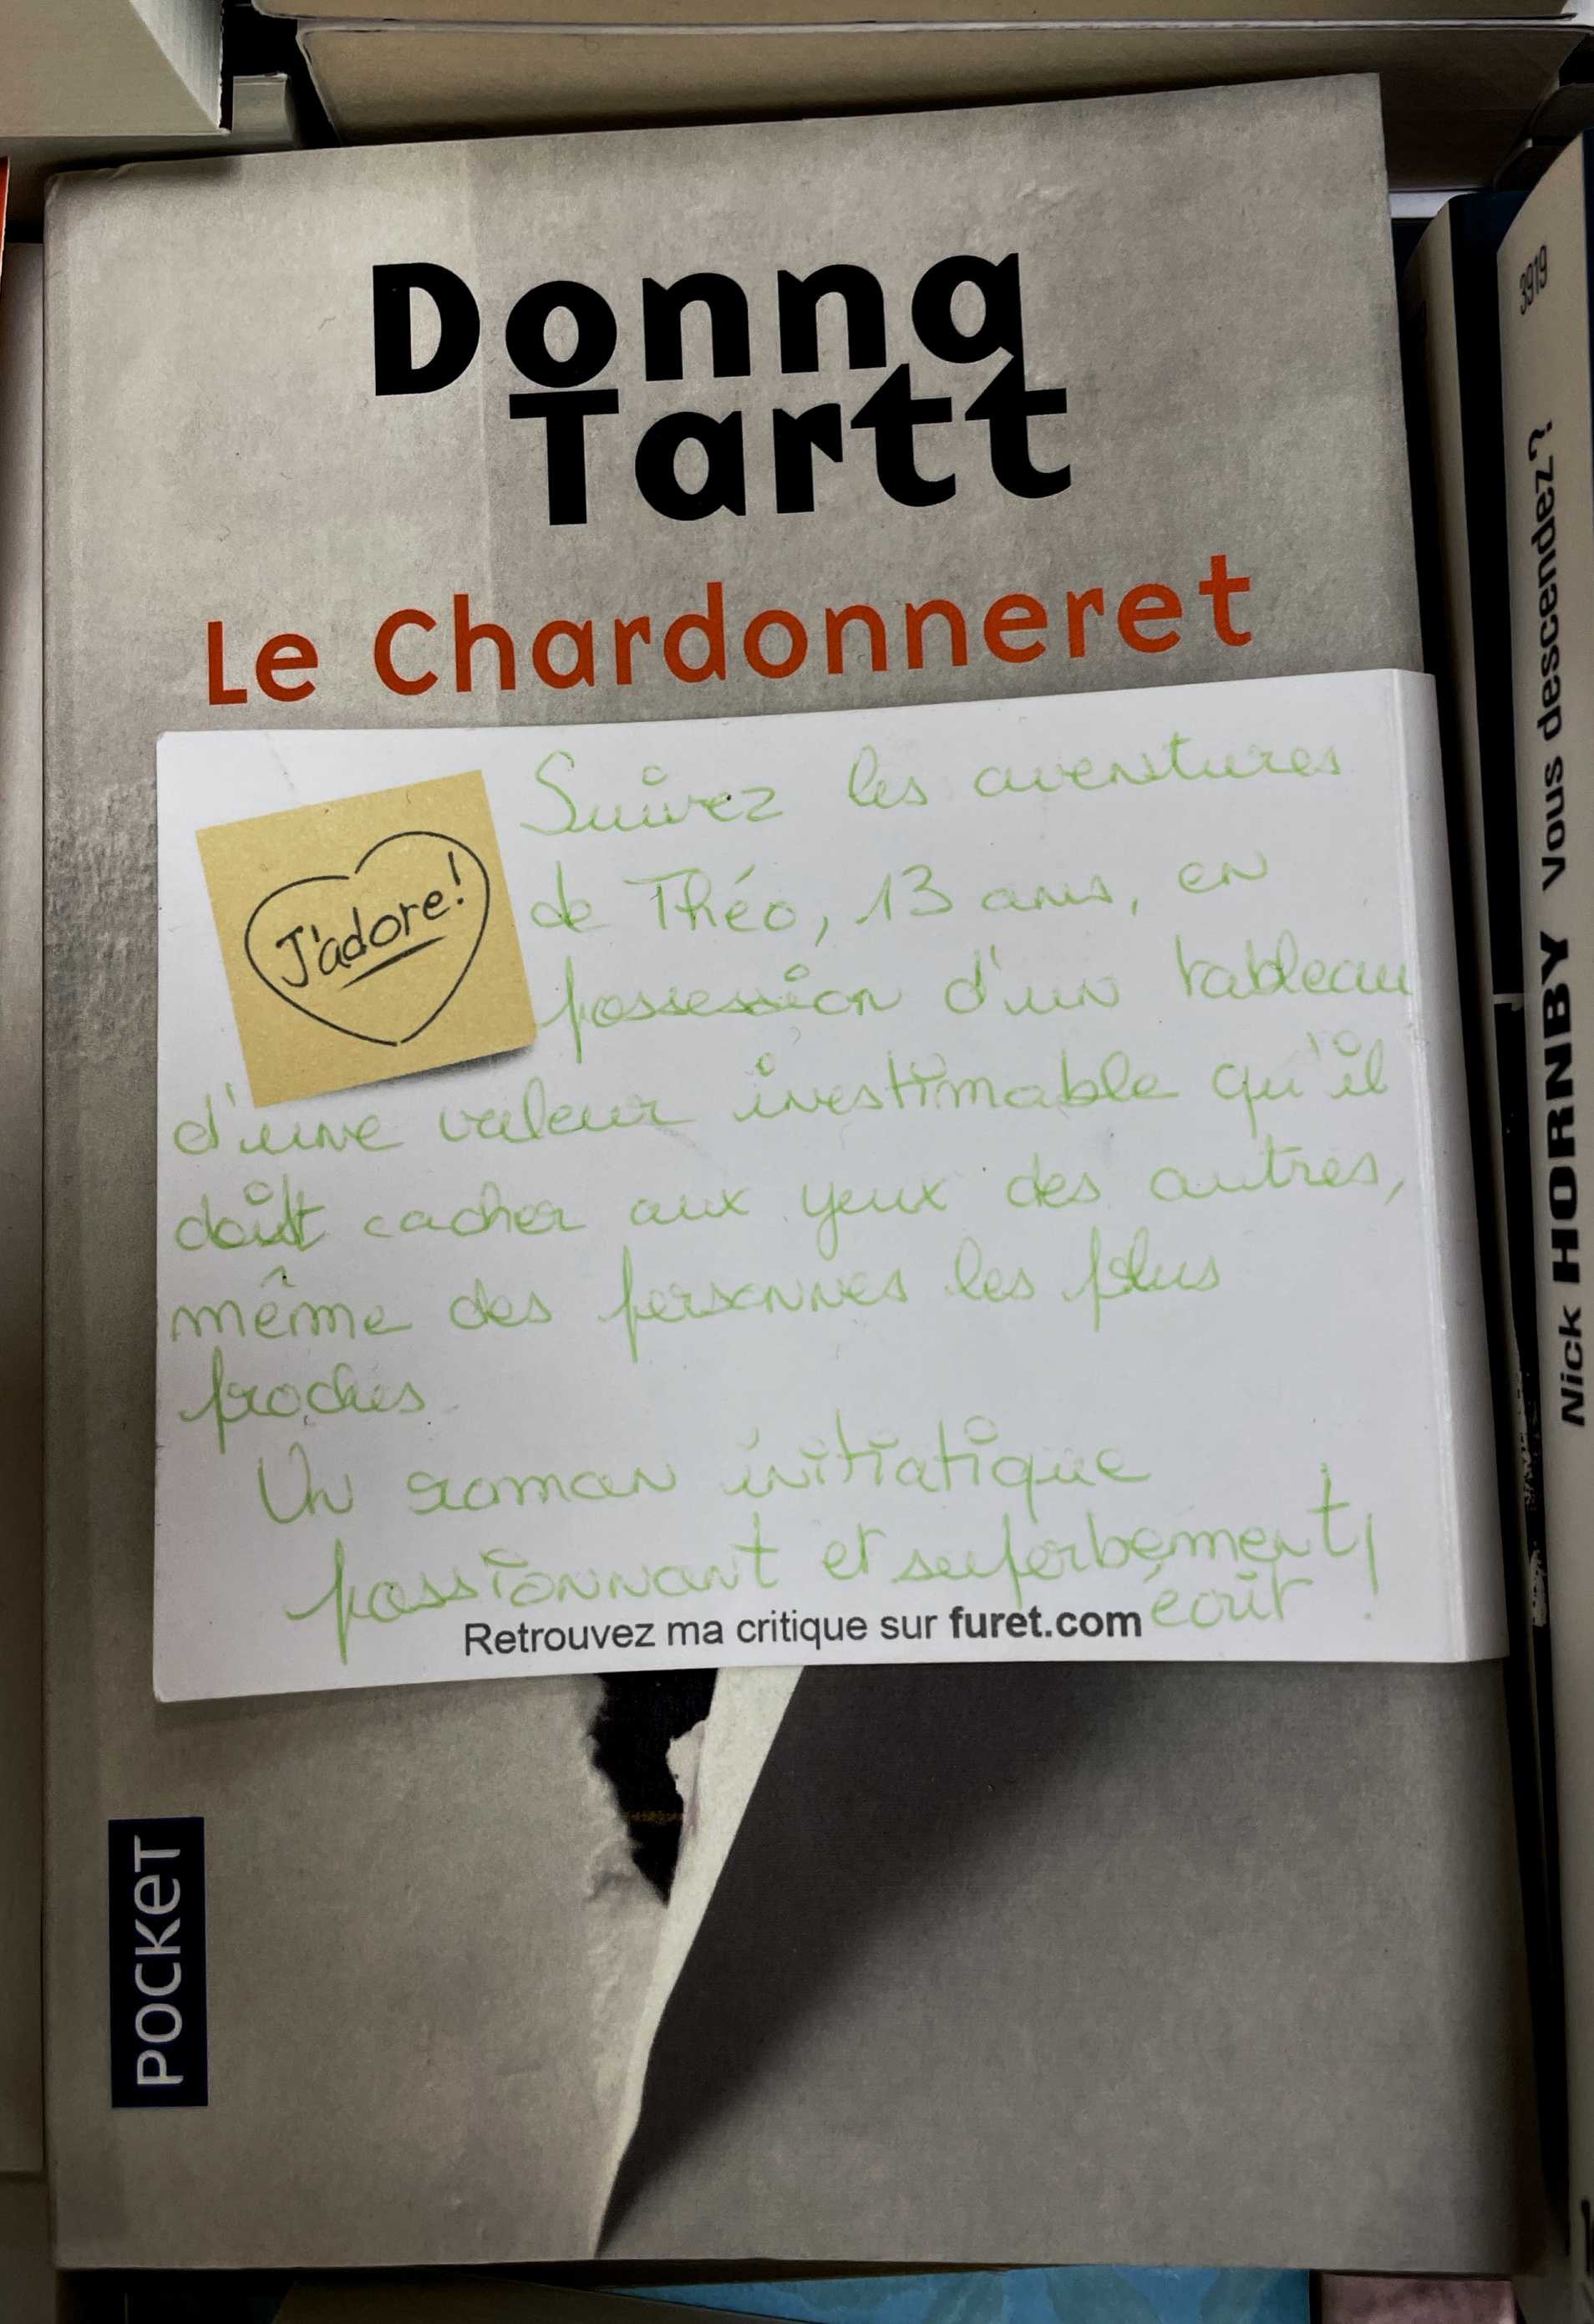 Le Chardonneret, Donna Tartt